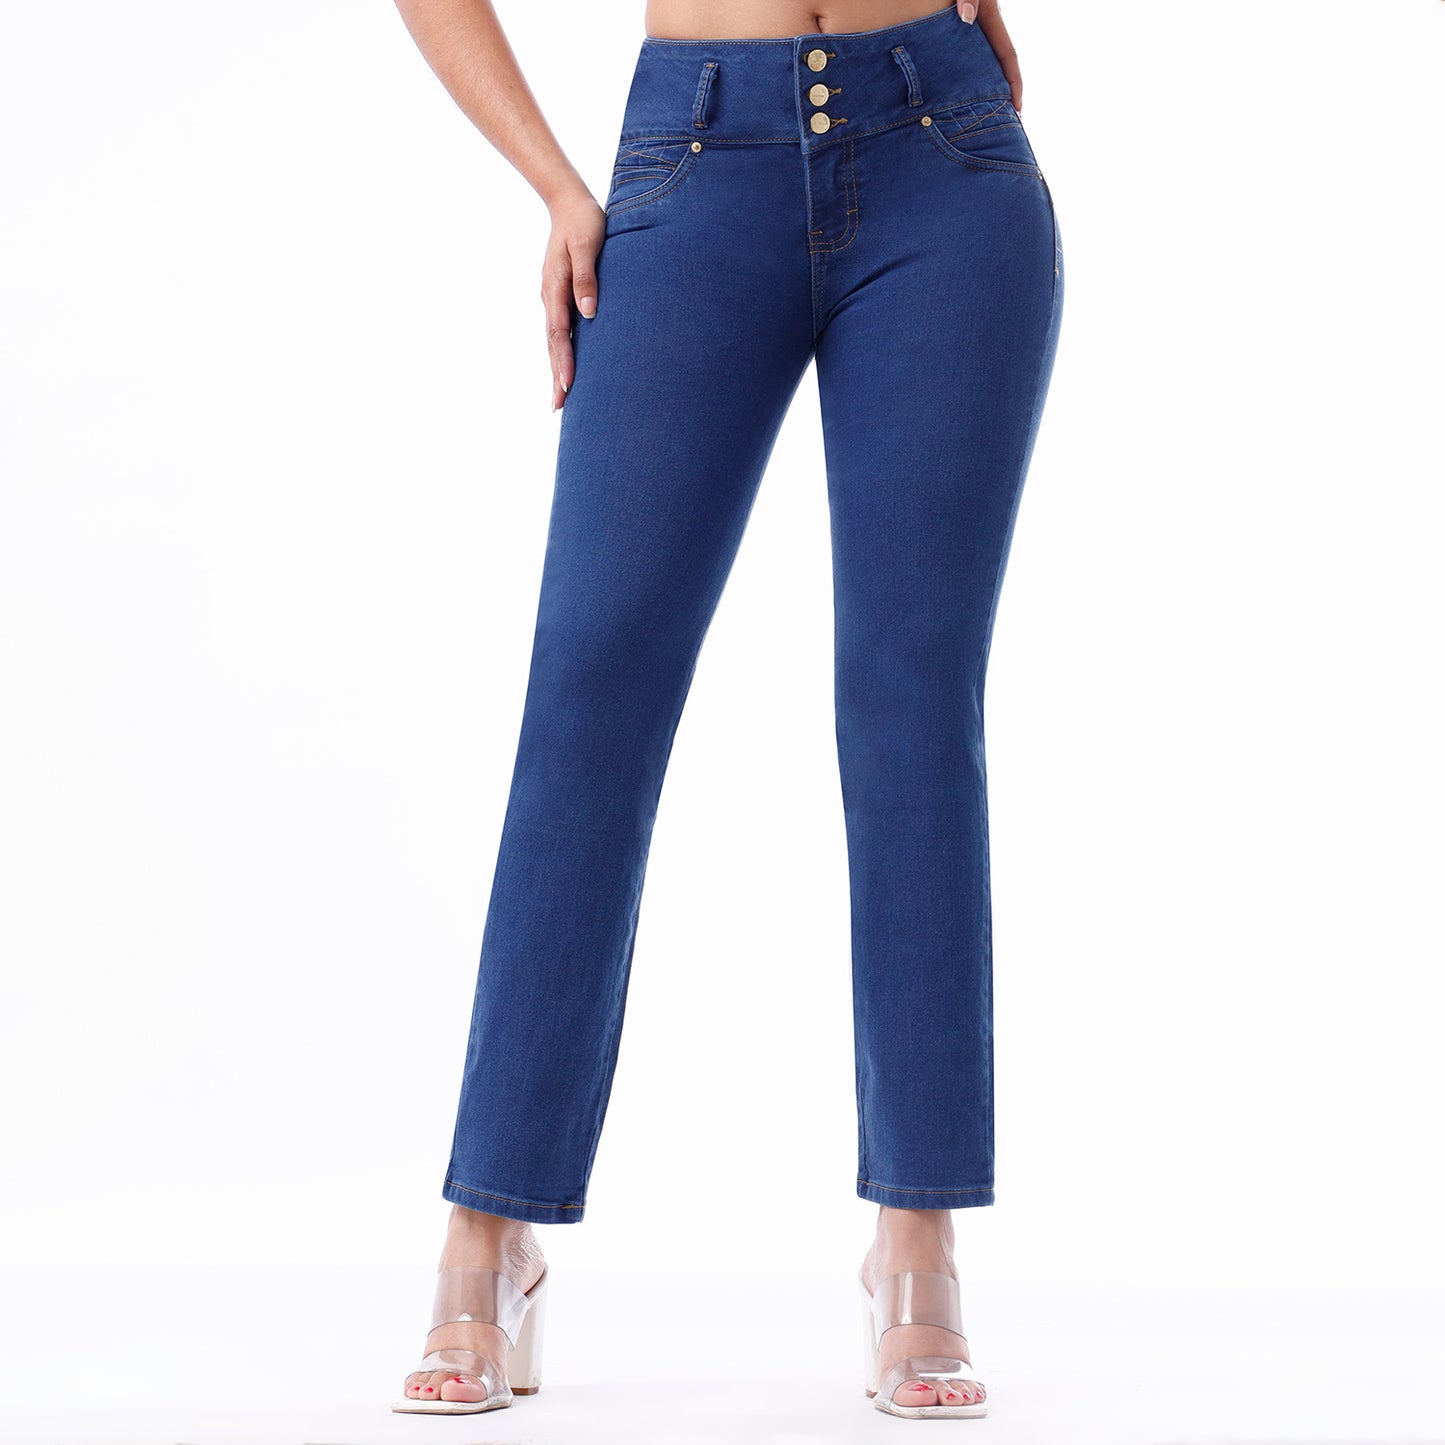 Jeans Push Up Mujer Semimoda Semi Recto Cintura Cristal – 220663